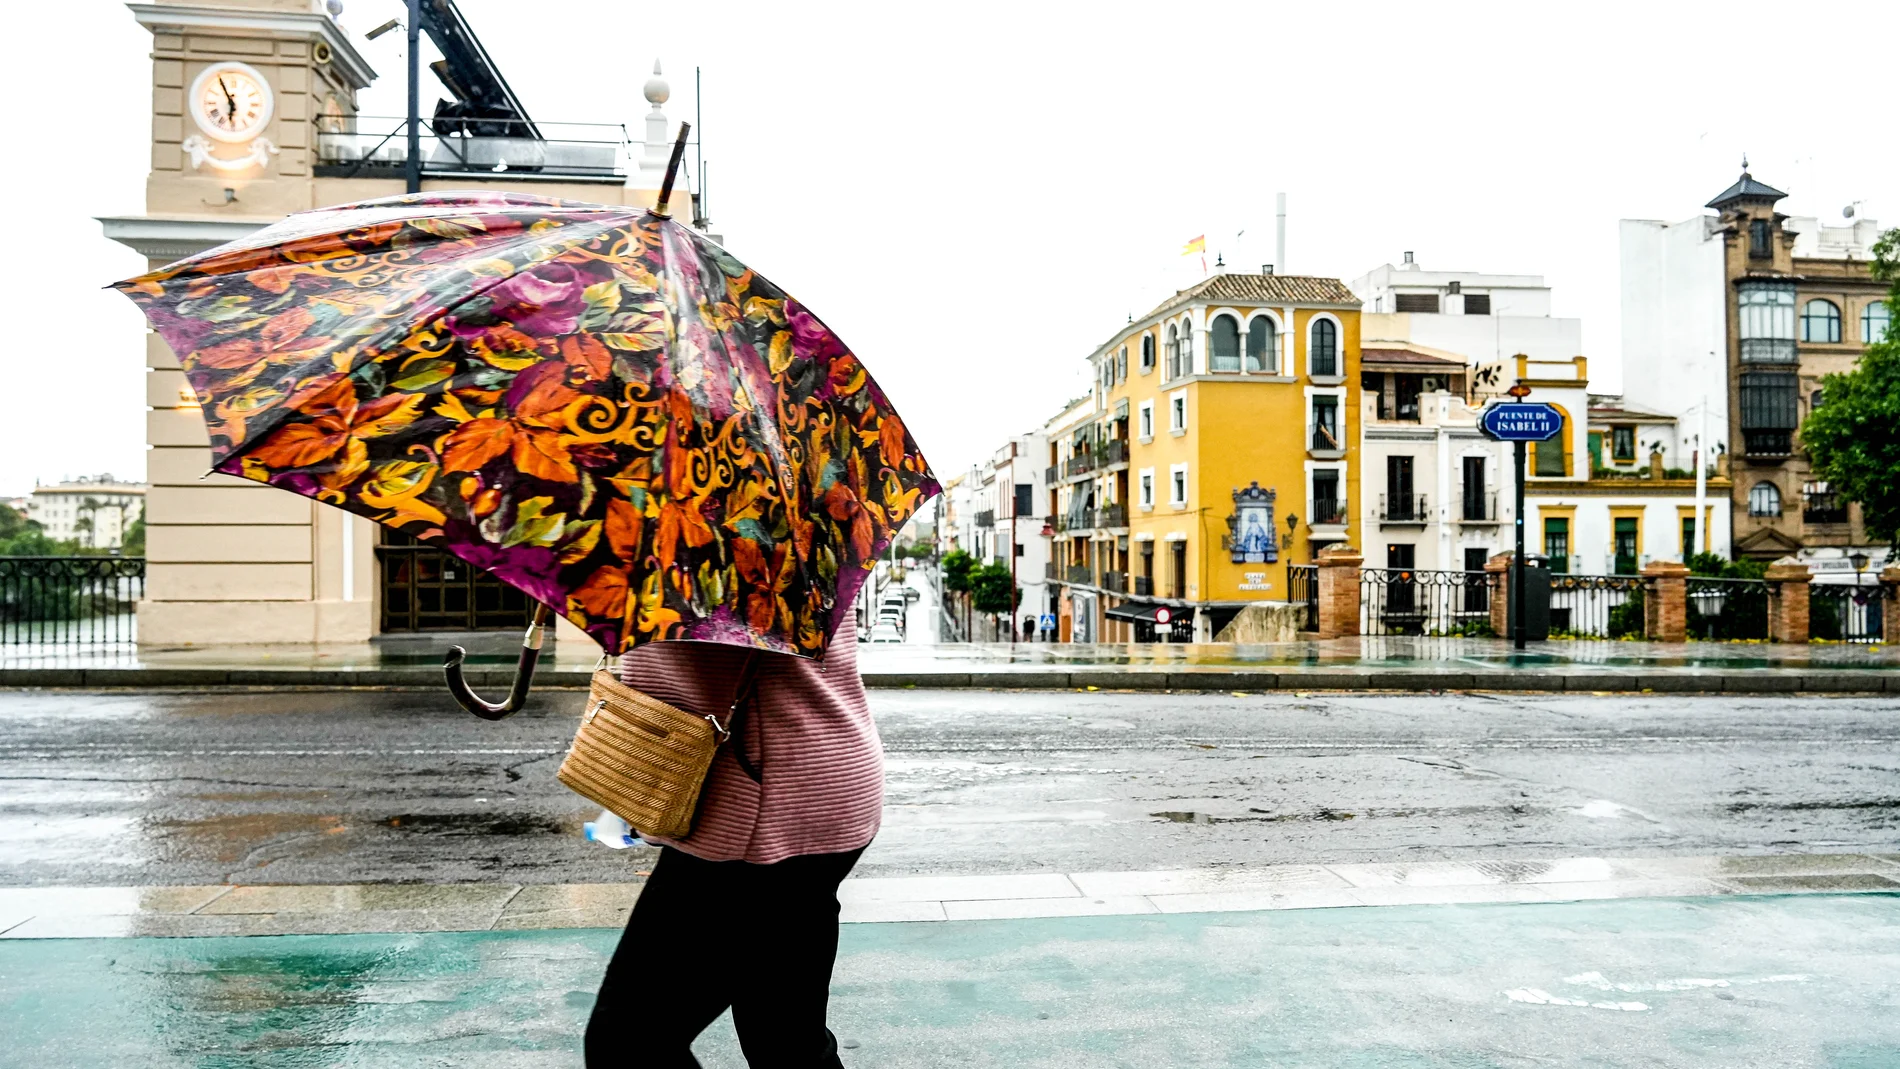 Dos nuevos frentes con lluvias intensas y viento pasearán este fin de semana por toda España